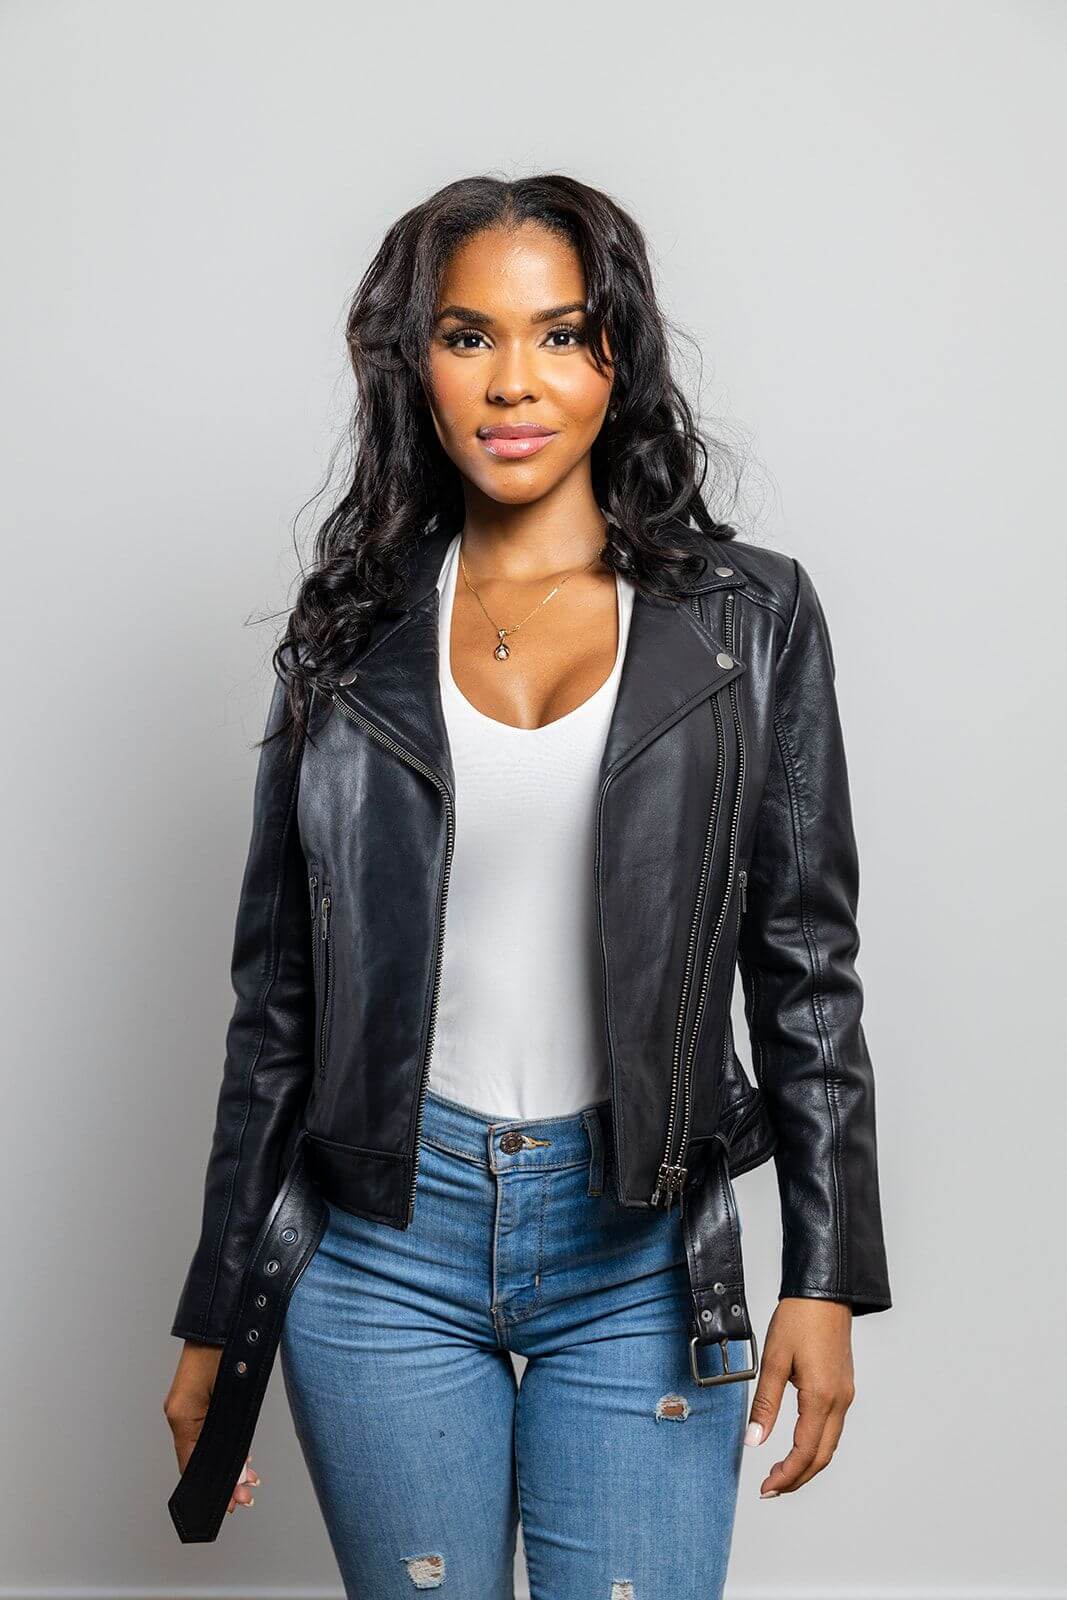 Chloe women's fashion leather jacket black woman wearing jacket front view